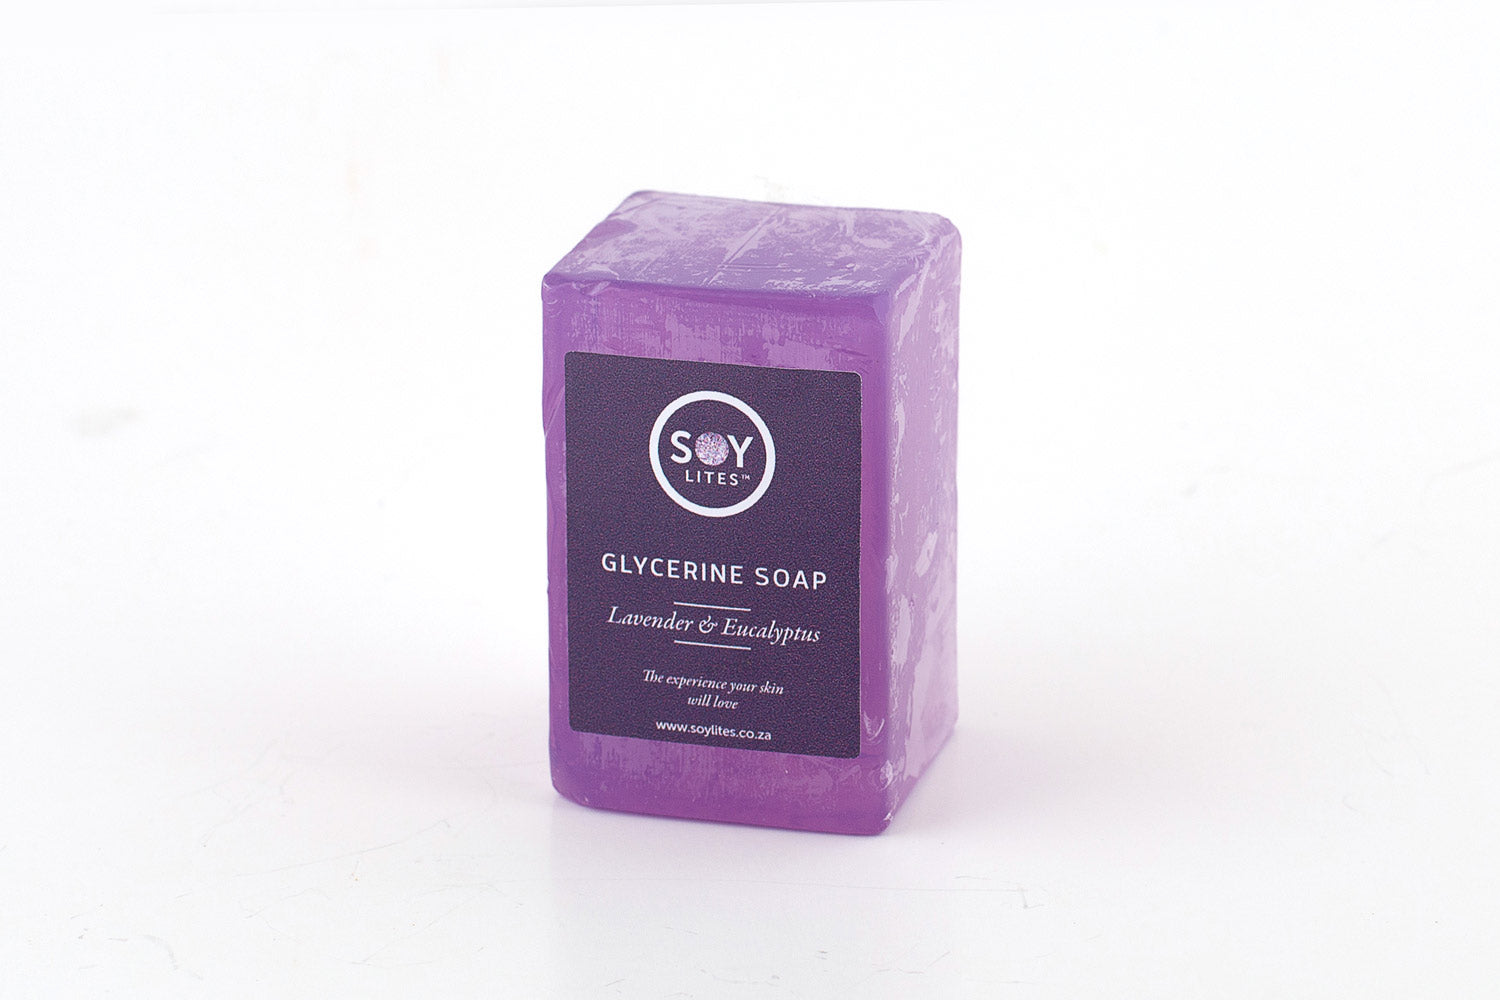 Hand made Lavender glycerine soap.  Fun color of purple!